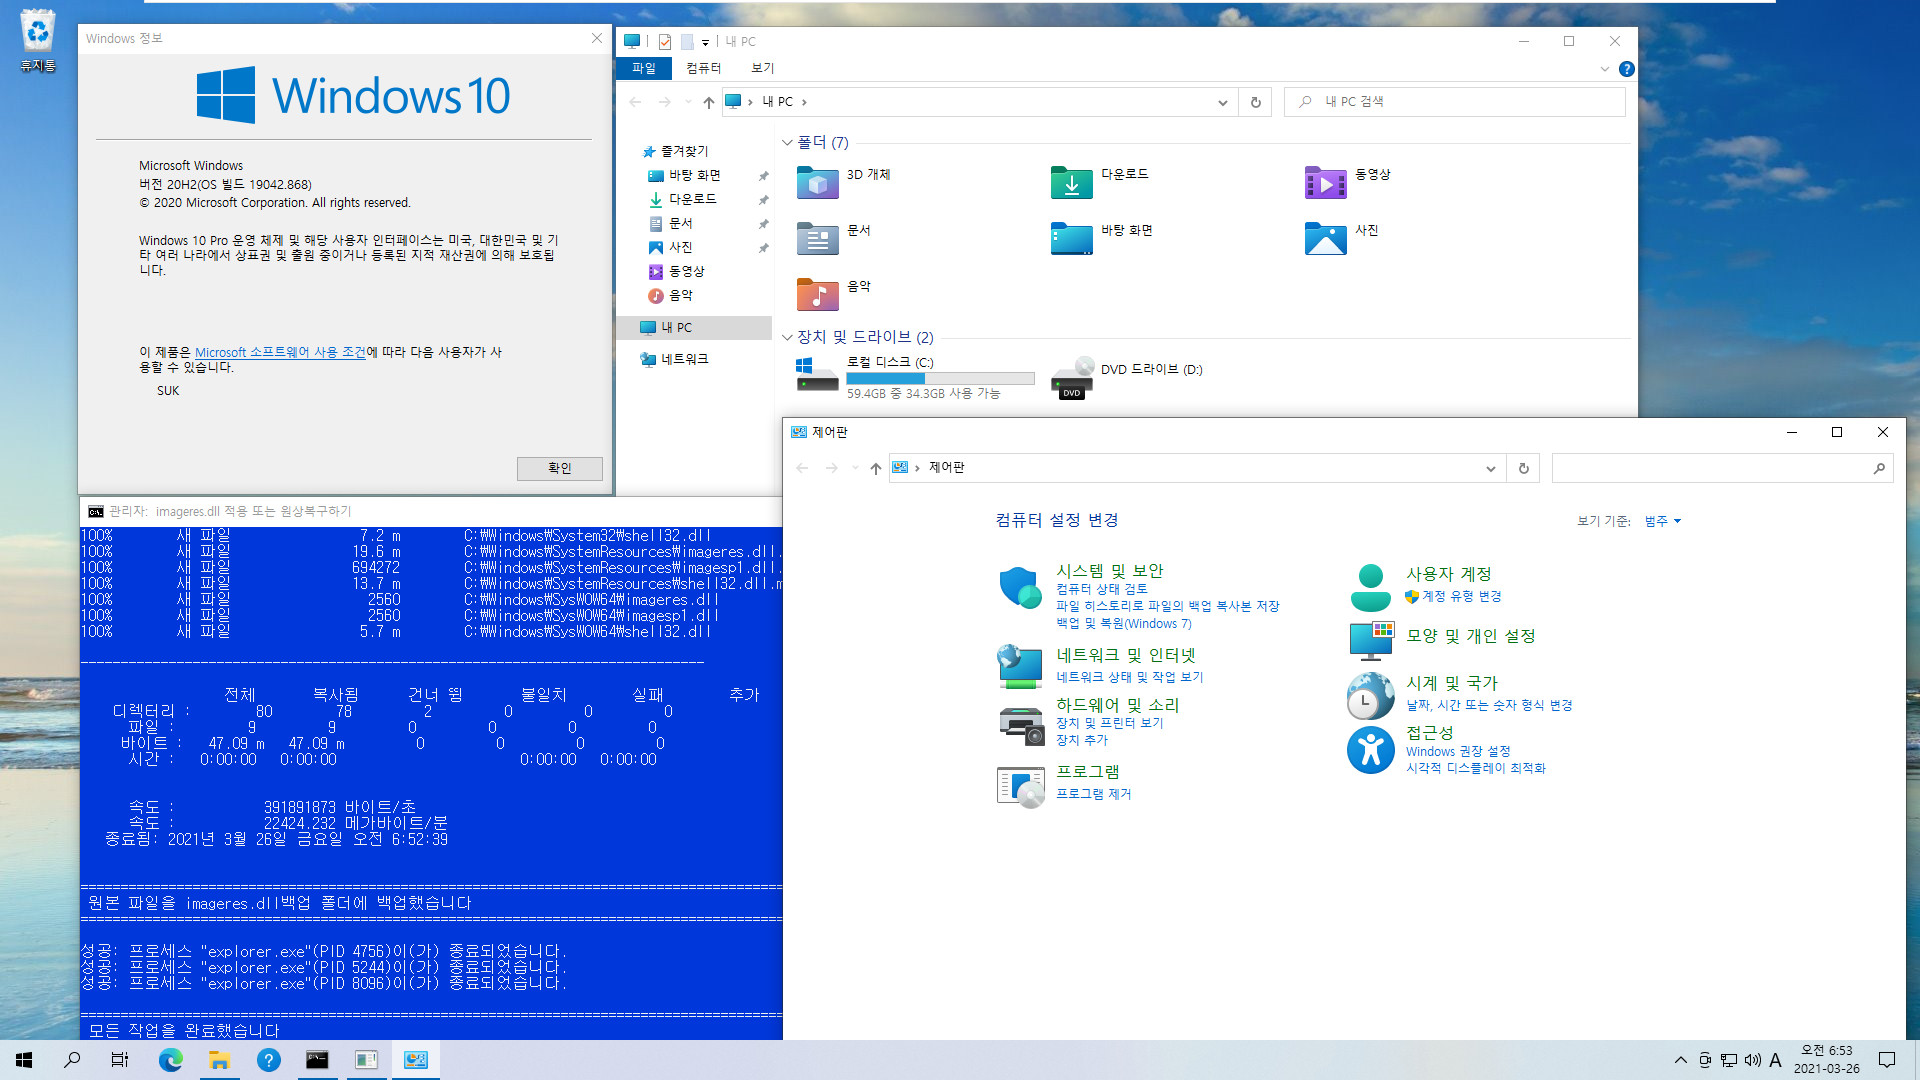 imageres.dll적용하기3 - nsudo.bat 테스트 - Windows 10 인사이더 프리뷰, 버전 21H2 추정, 빌드 21343.1000, PRO x64의 아이콘 적용하기 - 버전 21H1, 버전 20H2와 버전 2004까지 32비트 윈도우도 적용됩니다 2021-03-26_065305.jpg